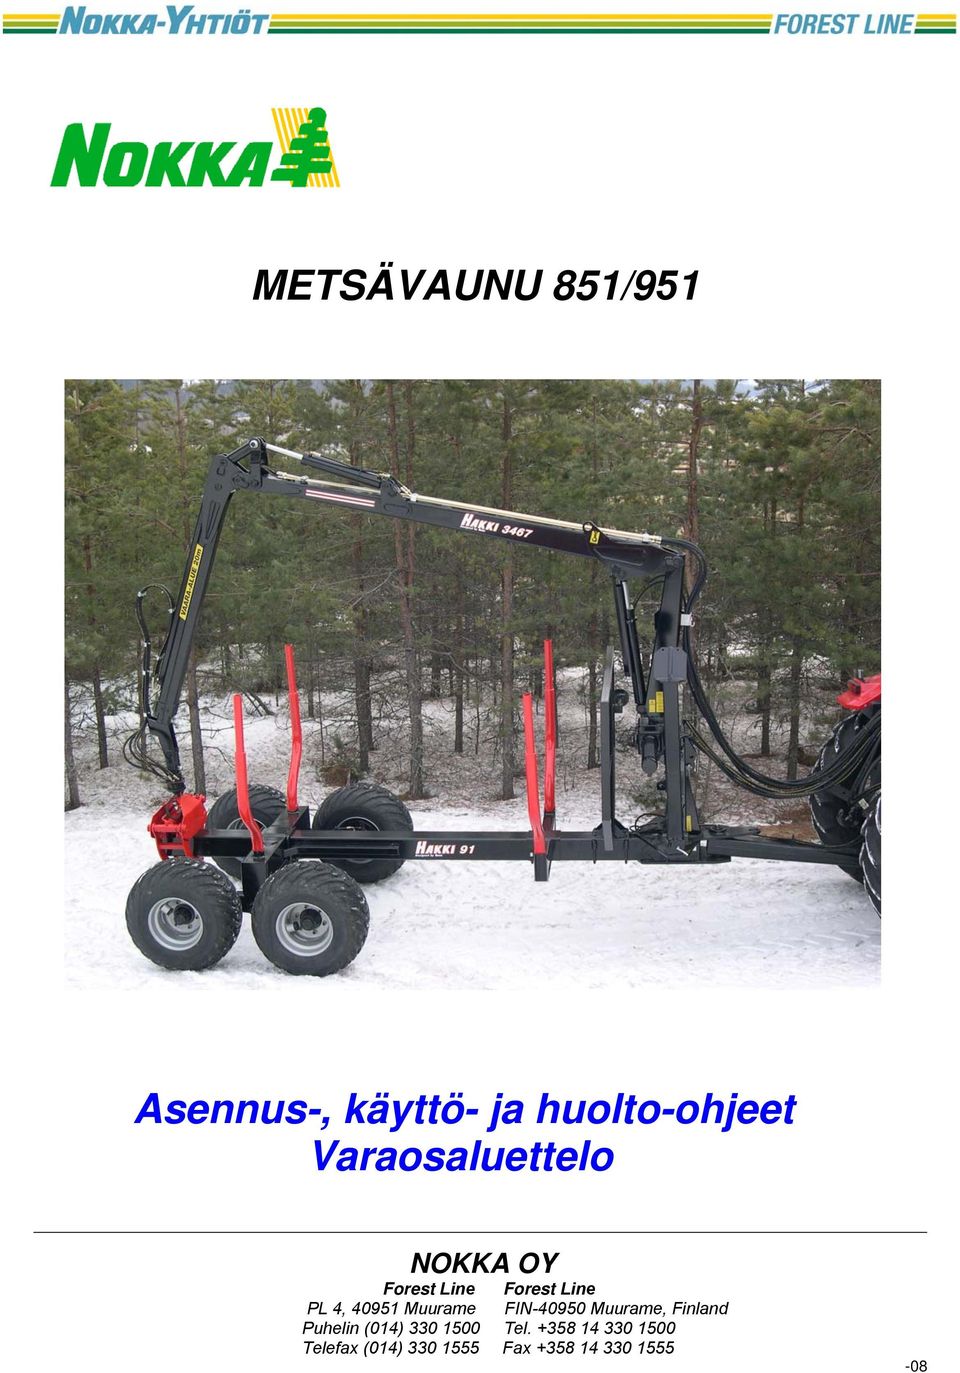 40951 Muurame FIN-40950 Muurame, Finland Puhelin (014) 330